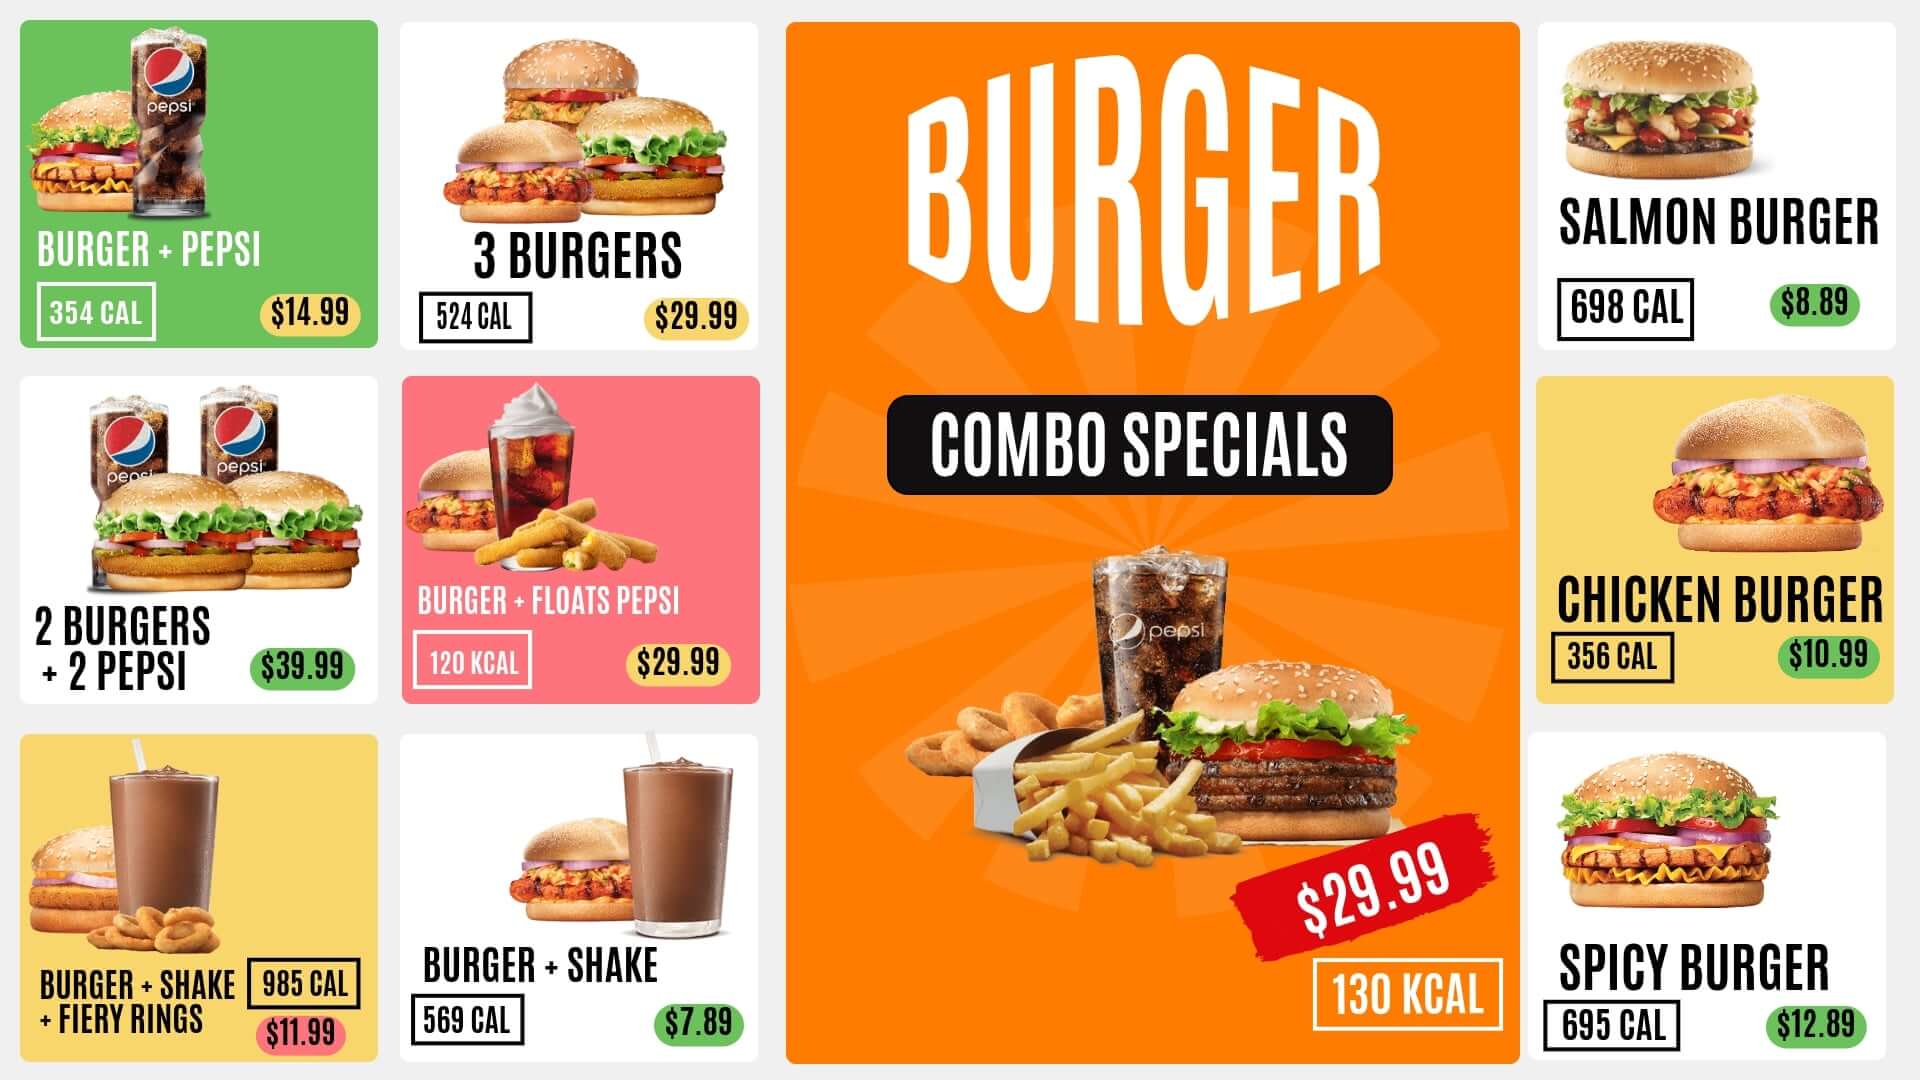 display calorie counts on digital menu boards